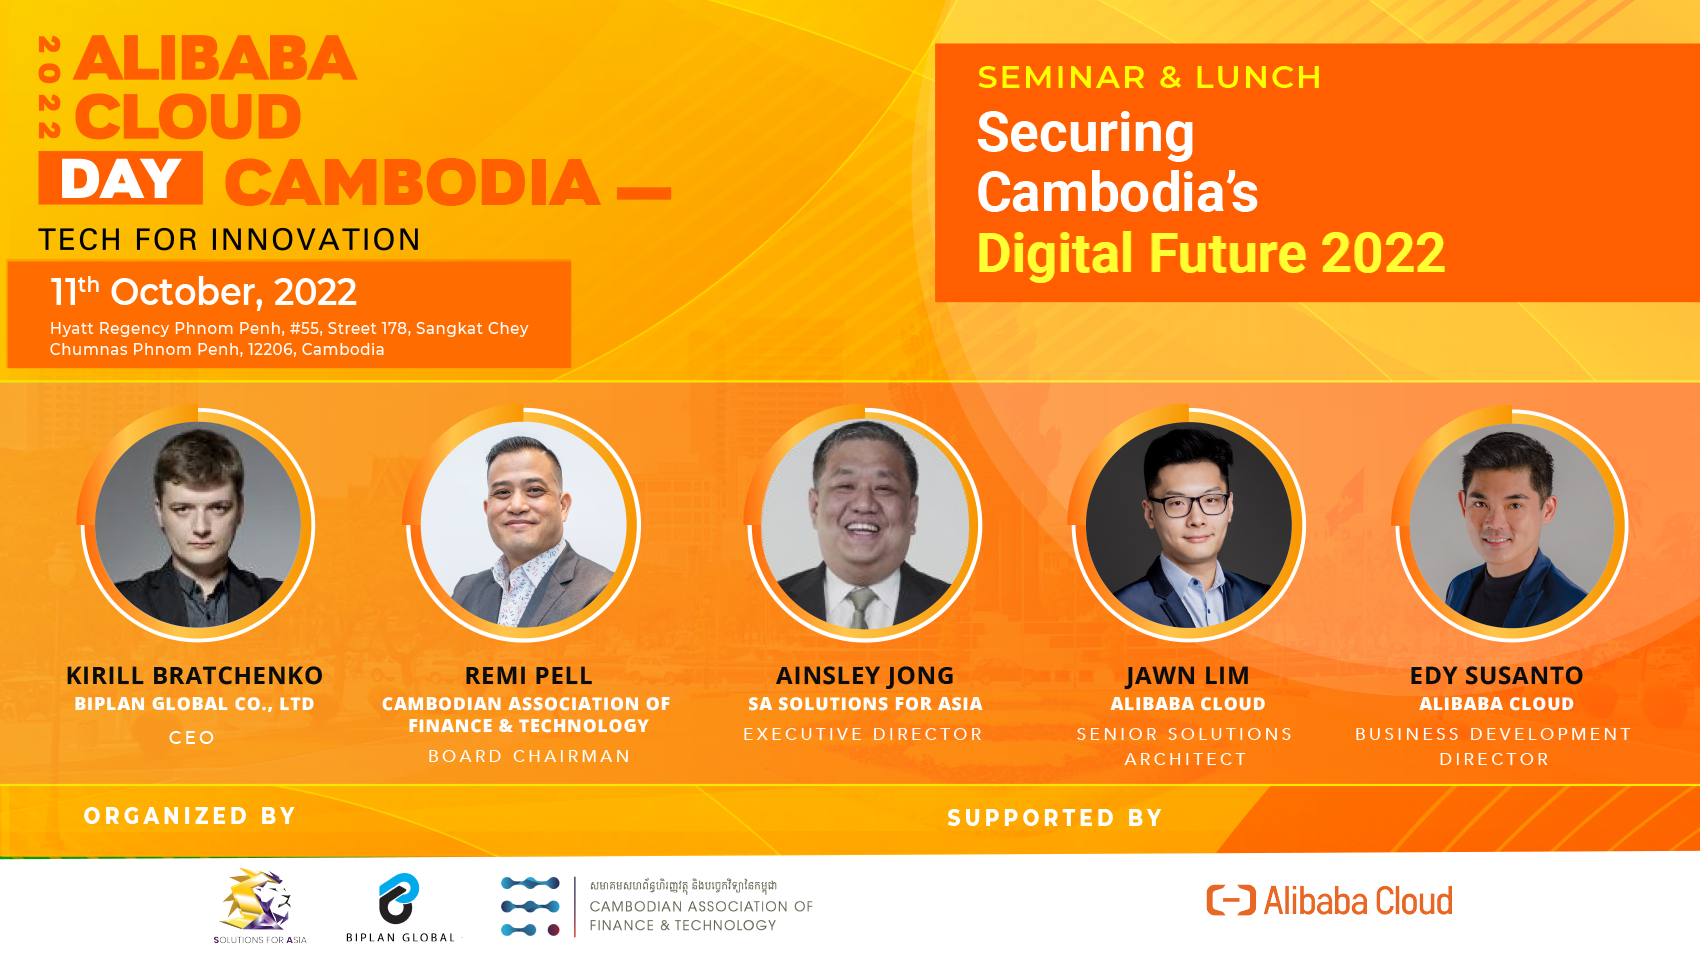 Alibaba Cloud Day Cambodia - Securing Cambodia's Digital Future 2022